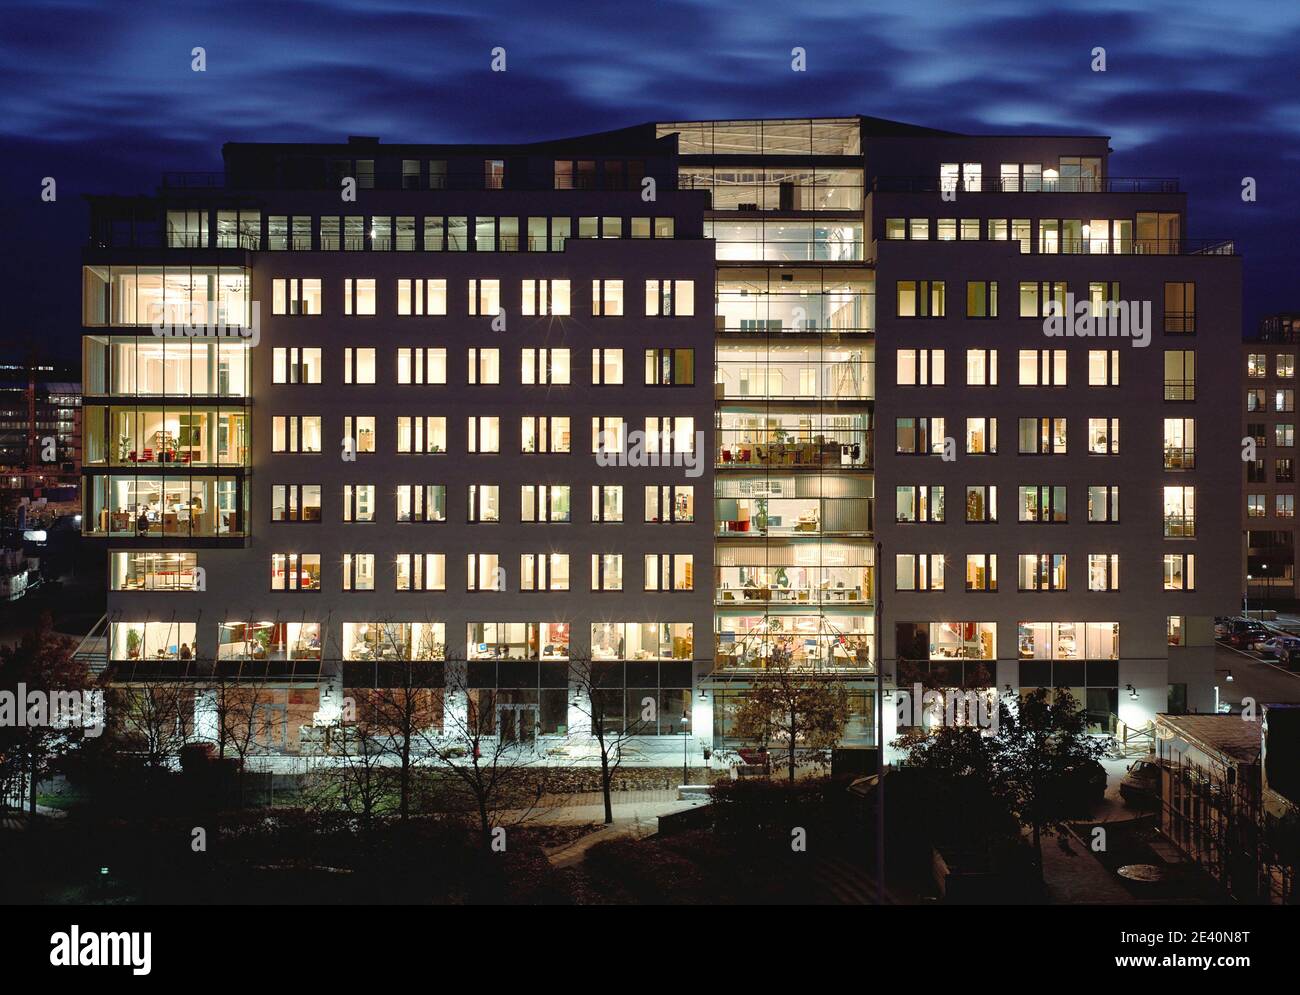 Marievik Office Building schweden, sweden, Svezia, Suecia Architect: DOM Architects, Stockholm 2002 Stock Photo